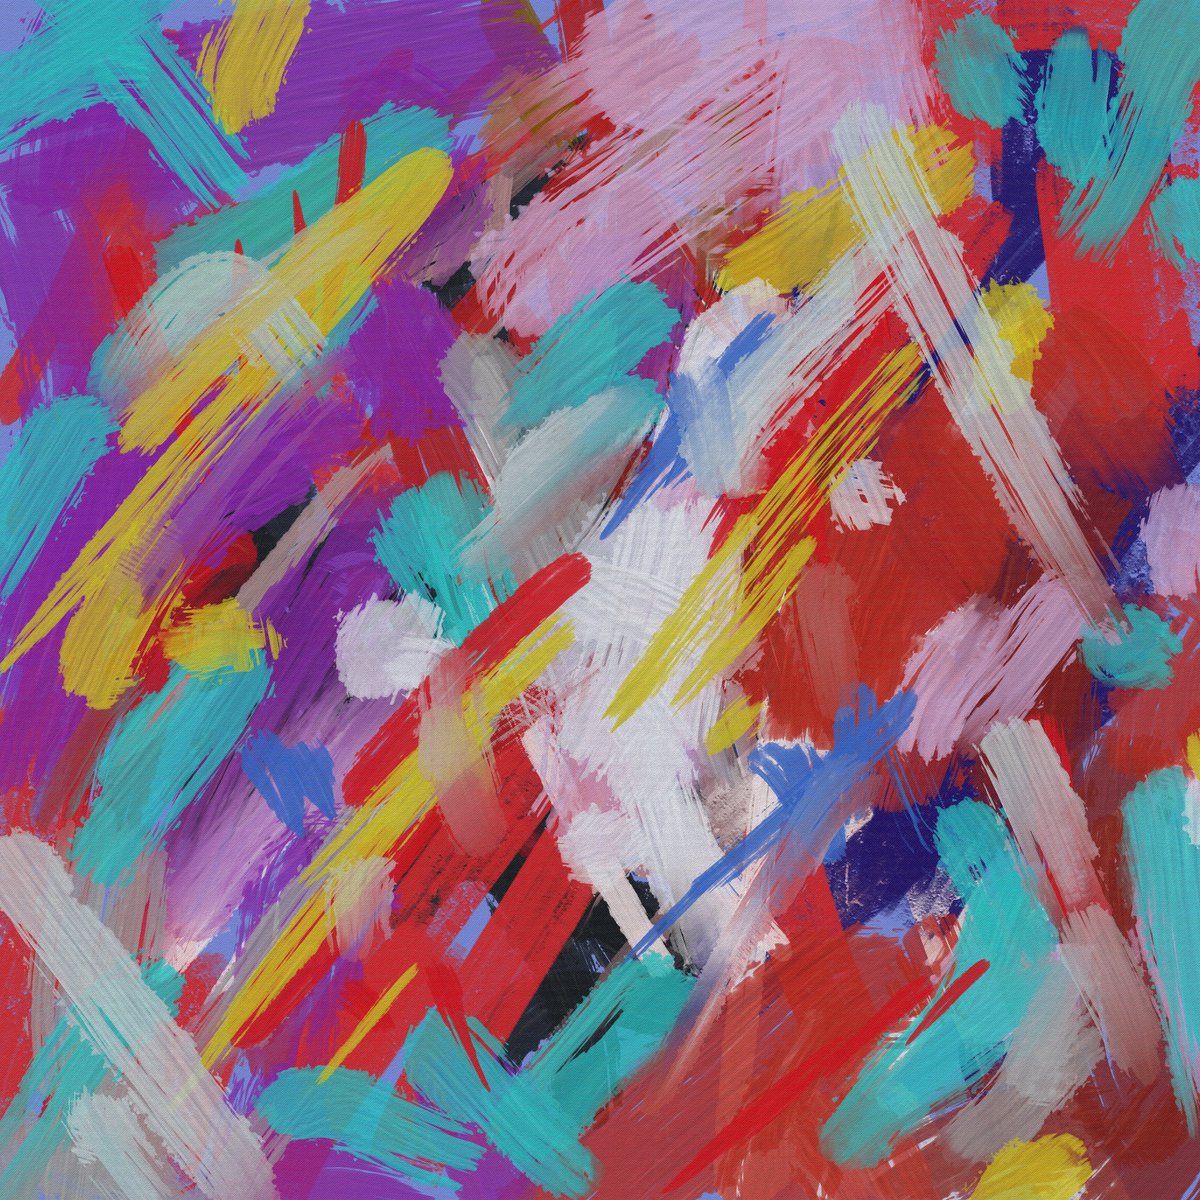 New #abstract #painting for the next #NFTPROJECT ✍️

#NFT #NFTCollection #opensea #abstractart #abstractpainting #Art #ArtistOnTwitter #Colors #artwork #NFTartwork #paintingoftgeday #artgallery #modernart #handmade #artworld #freshart #oilpainting #digitaloil